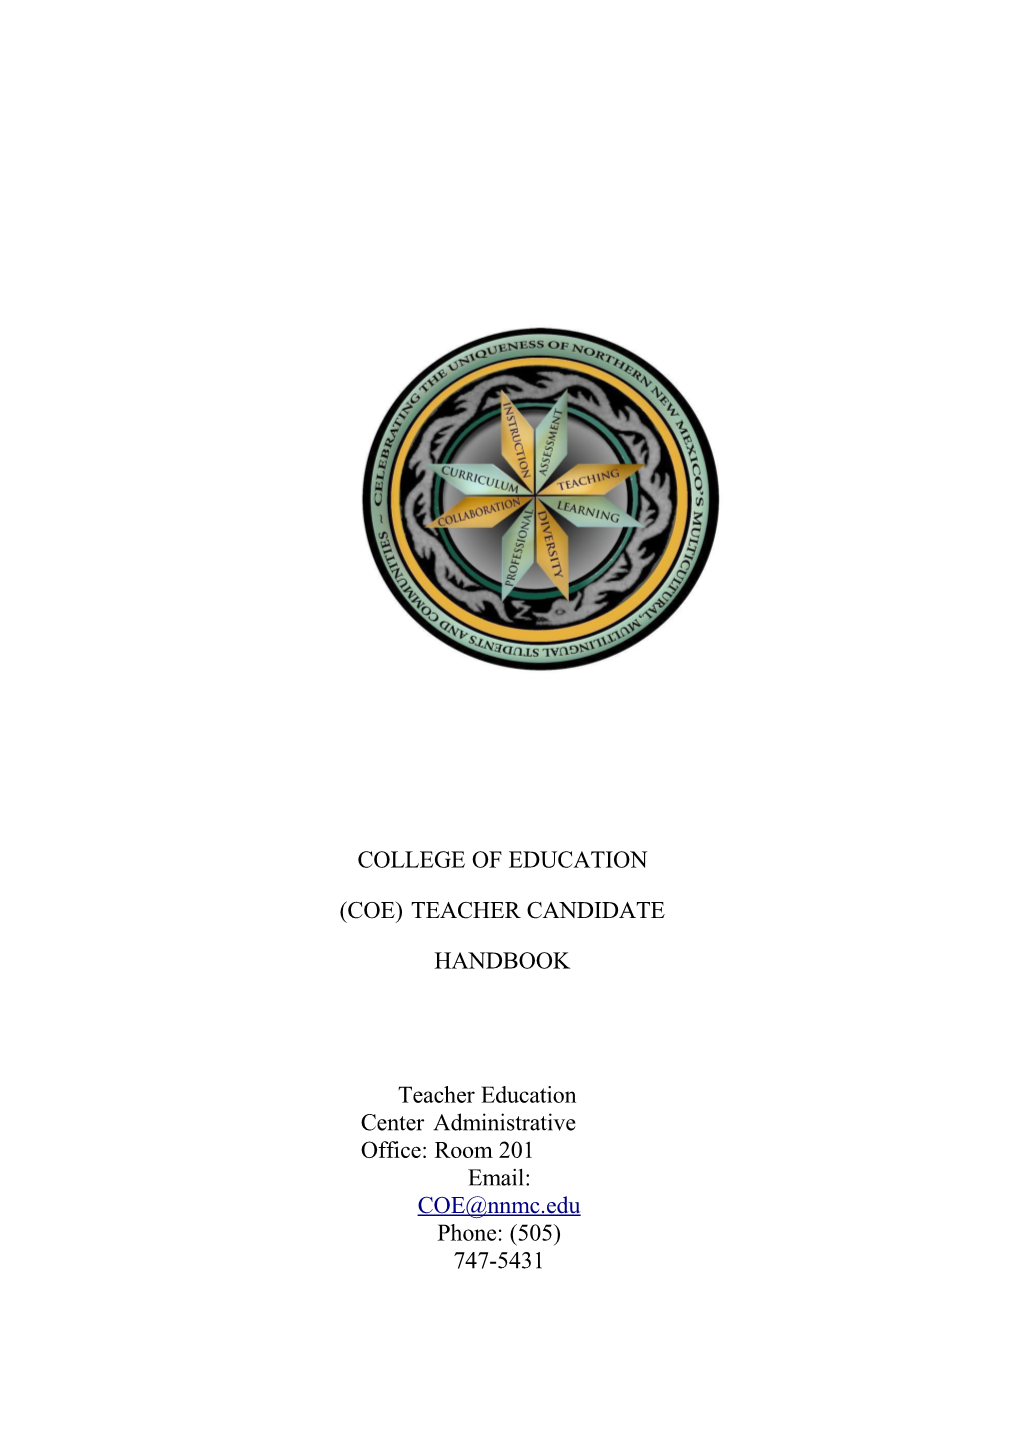 College of Education (Coe) Teacher Candidate Handbook